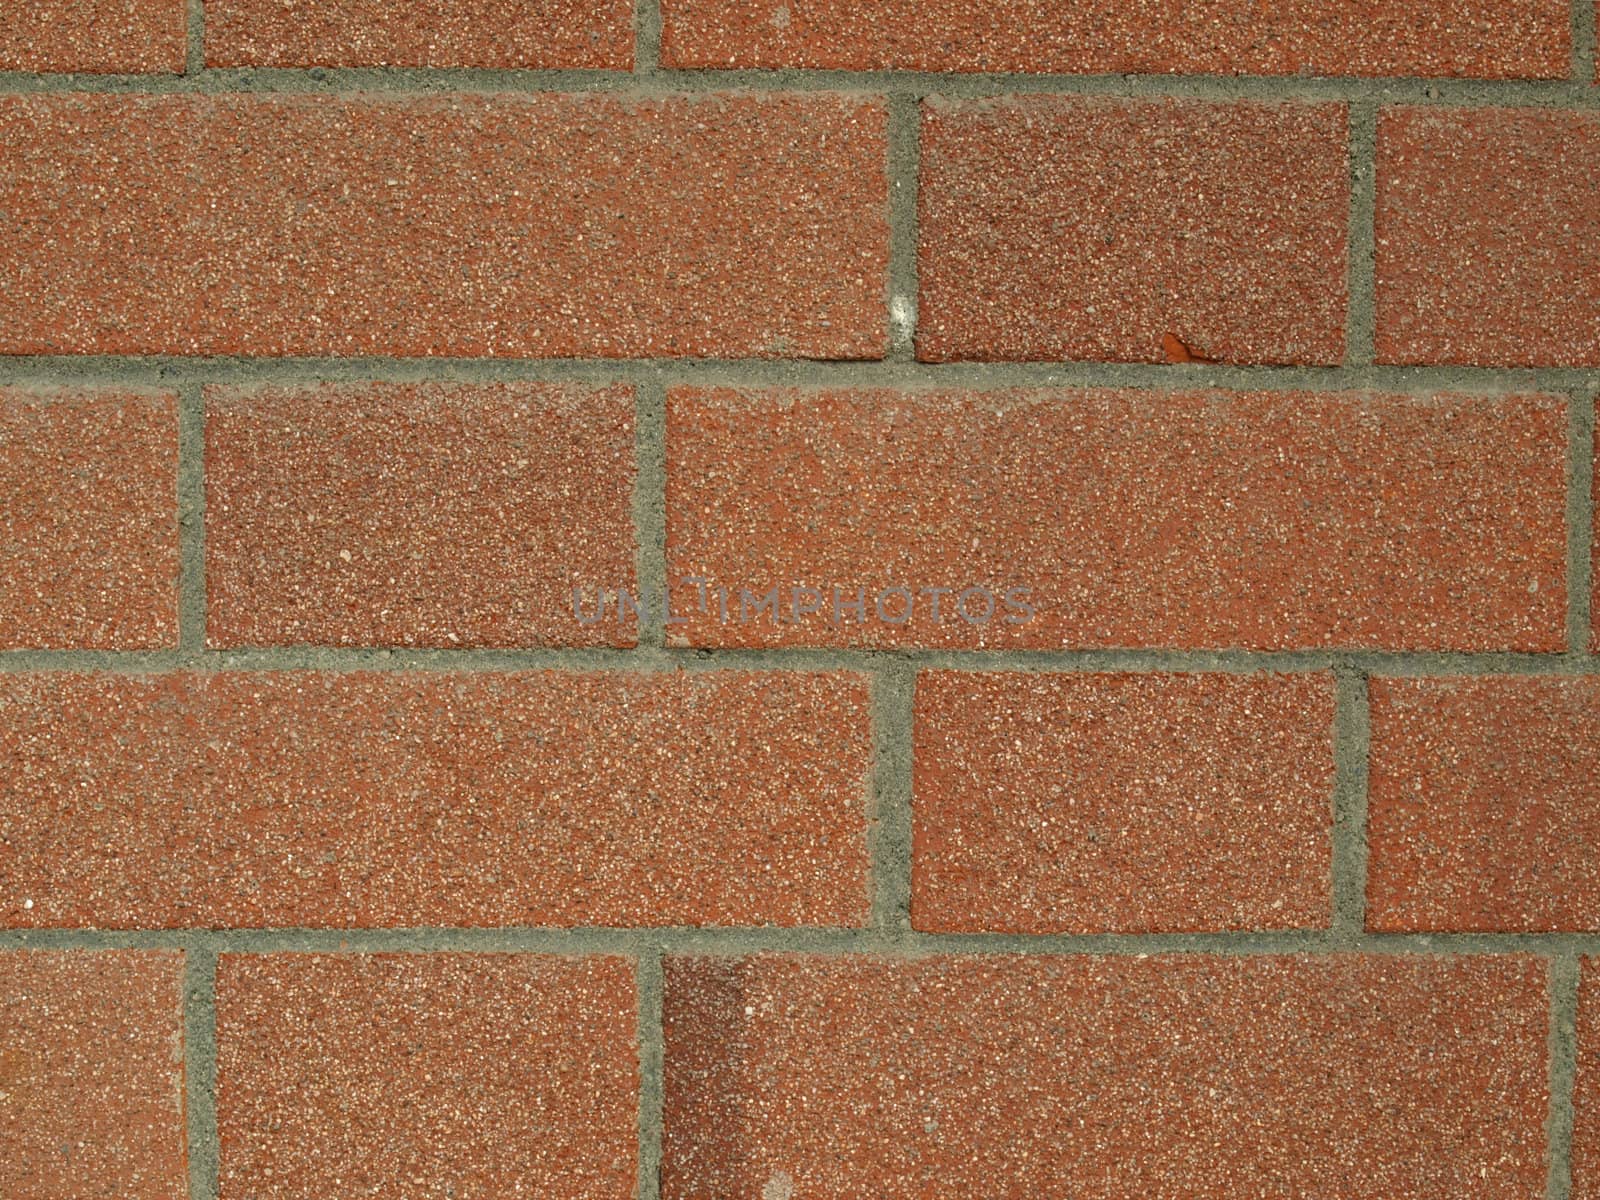 Brick wall background with English bond